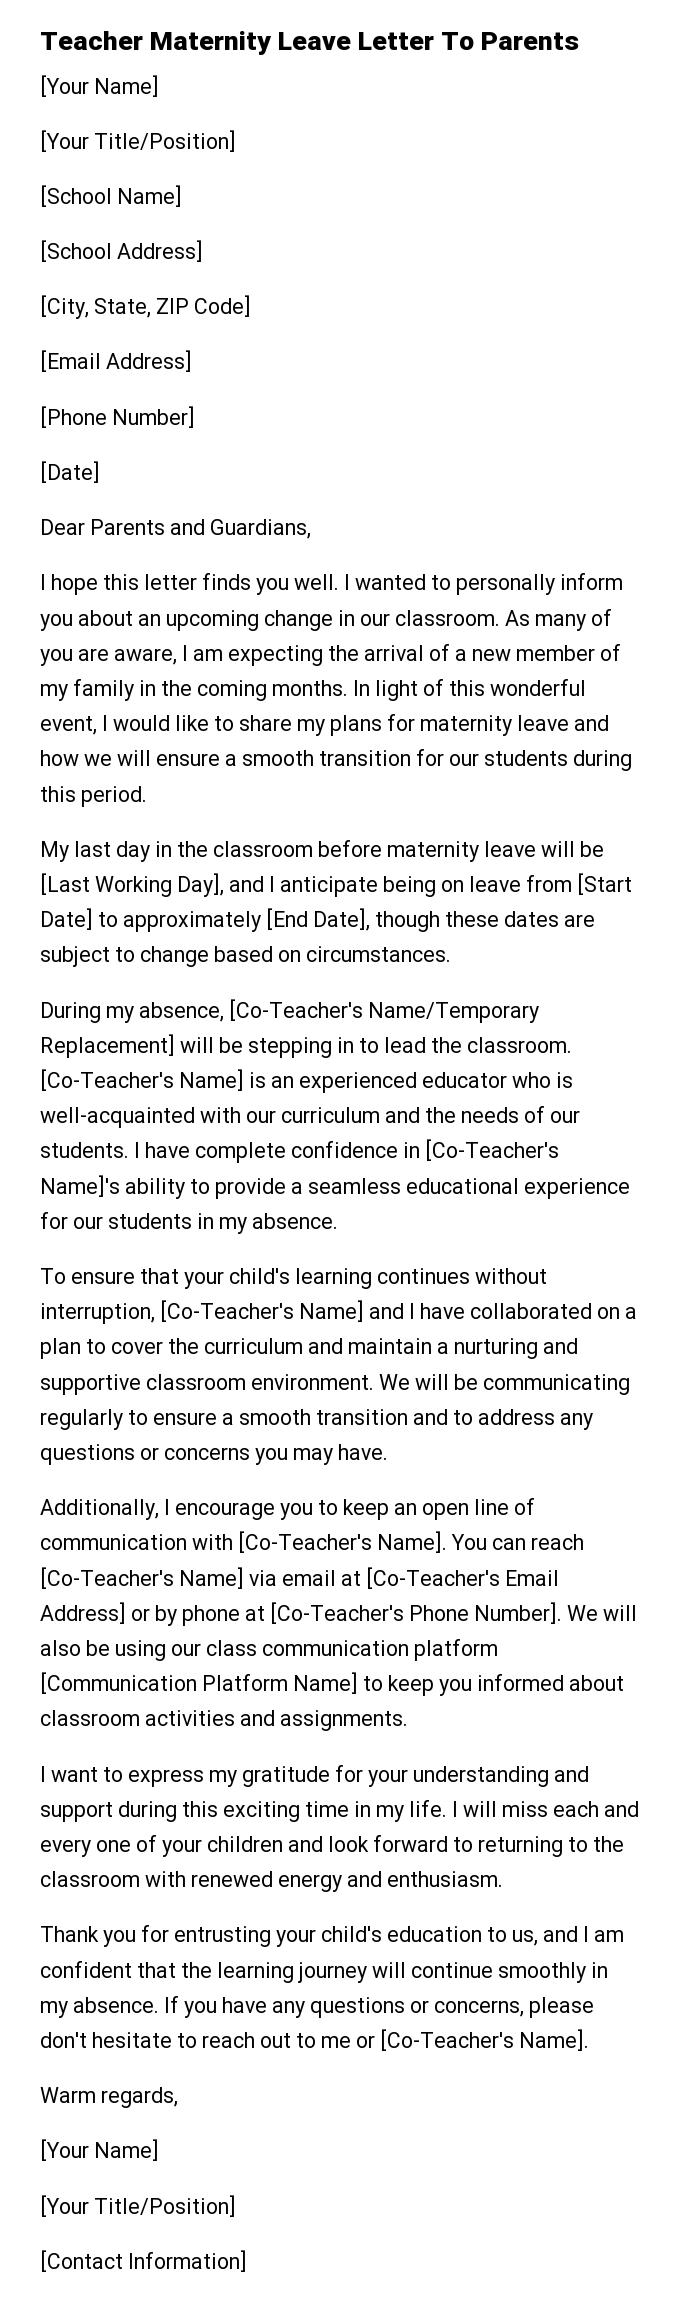 Teacher Maternity Leave Letter To Parents